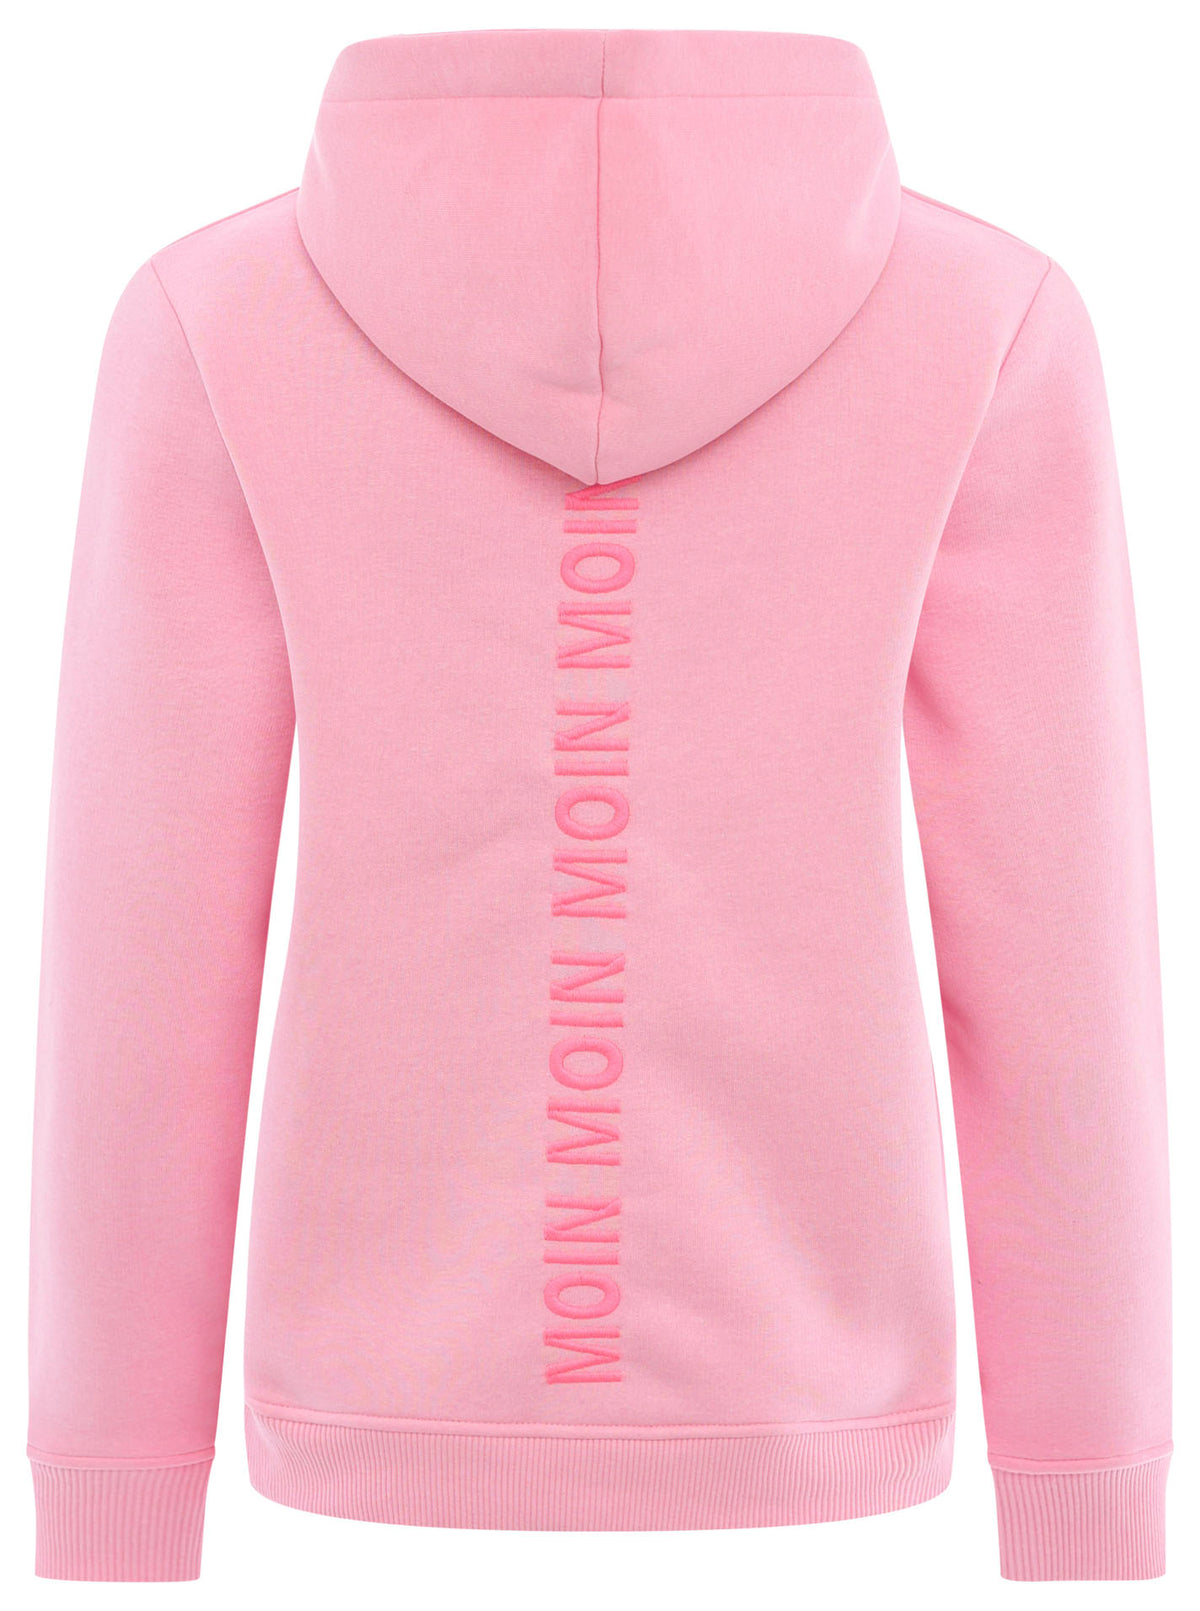 Zwillingsherz - Moin Hoodie/Sweatshirt mit Pailletten - Rosa/Pink